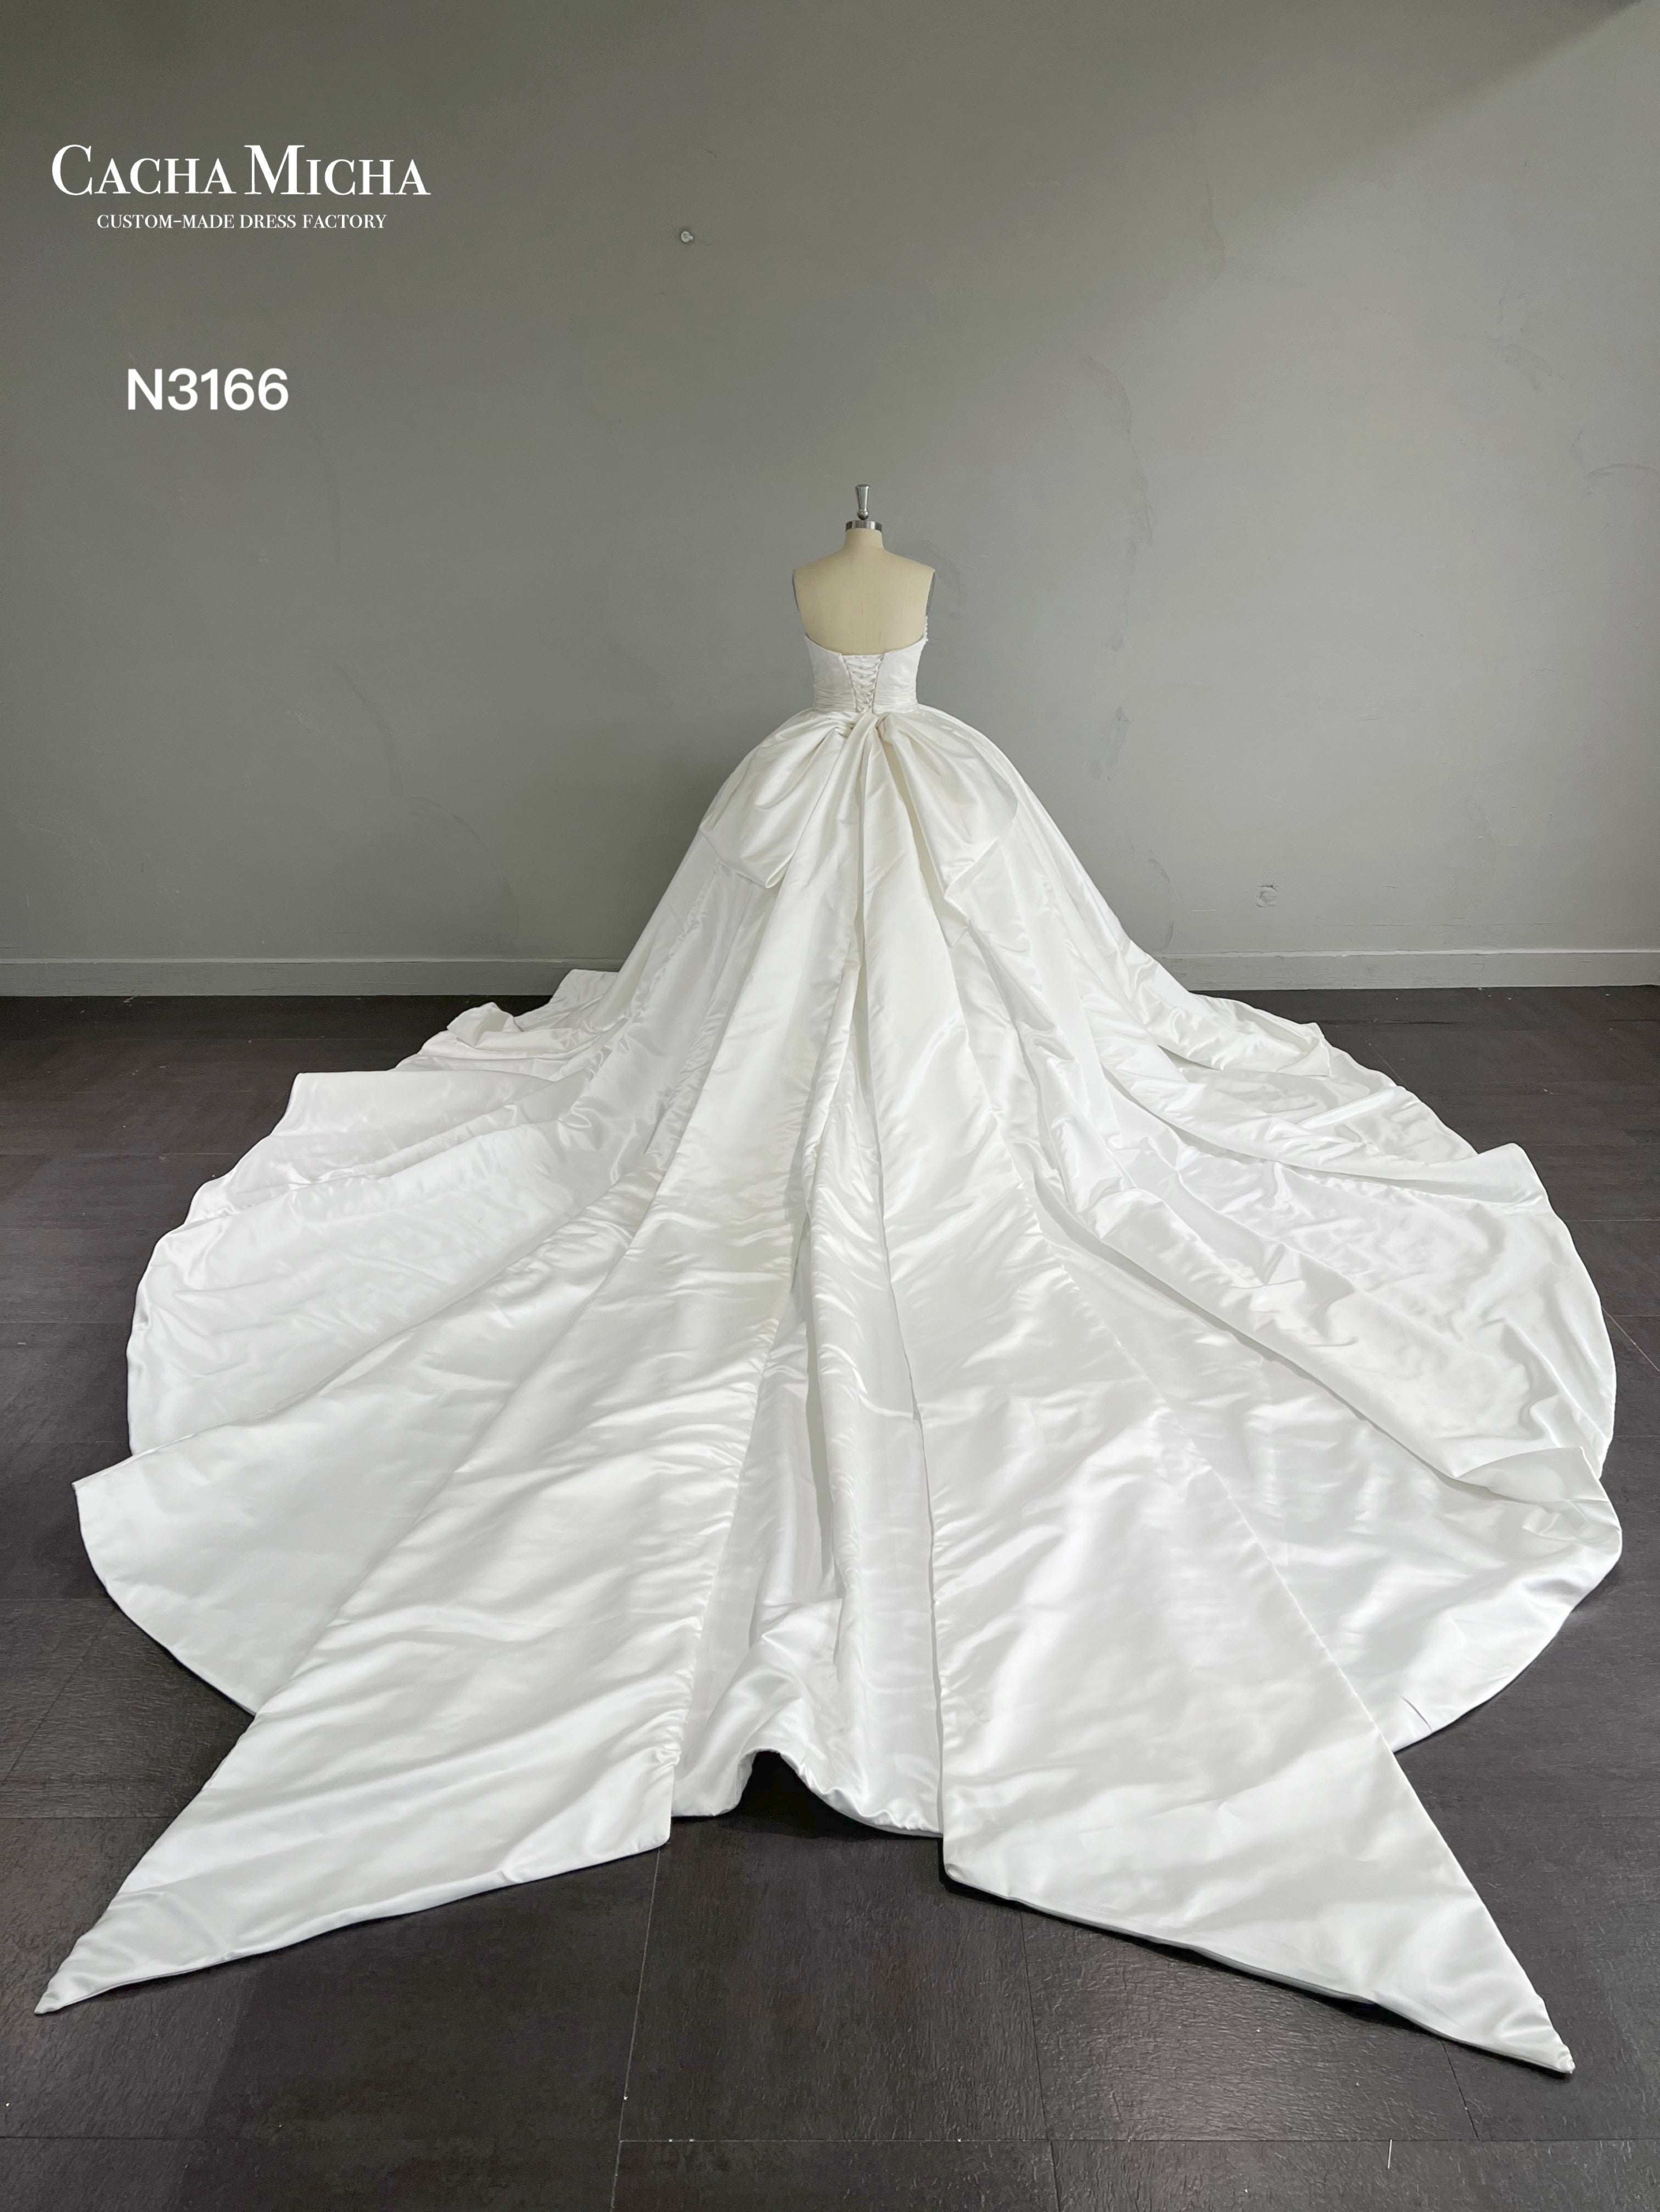 Cathedral Long Train Big Ball Gown Satin Wedding Dress N3166